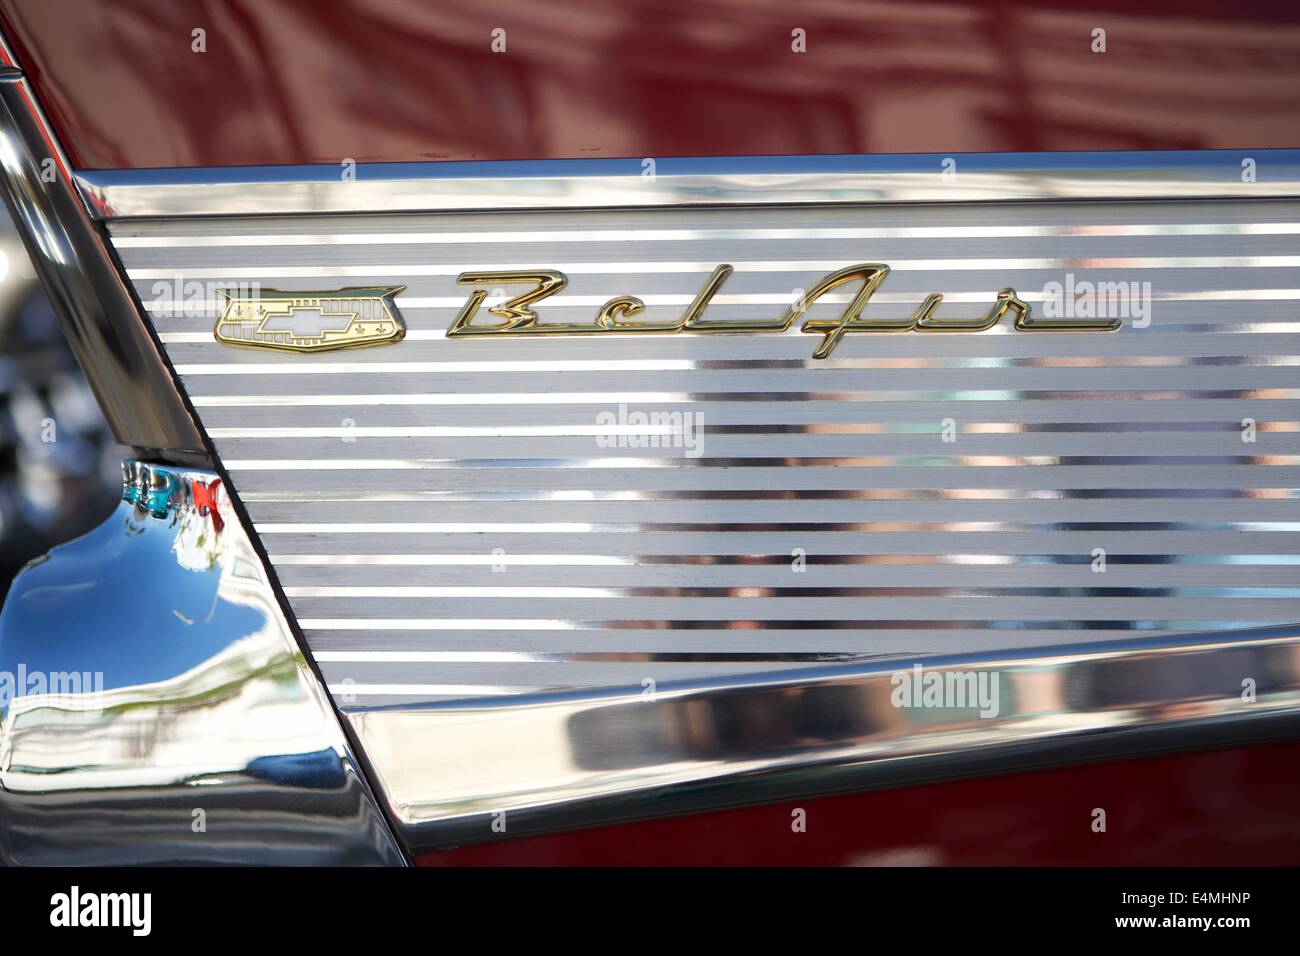 Classic Car Chevy Bel Air dettagli Foto Stock